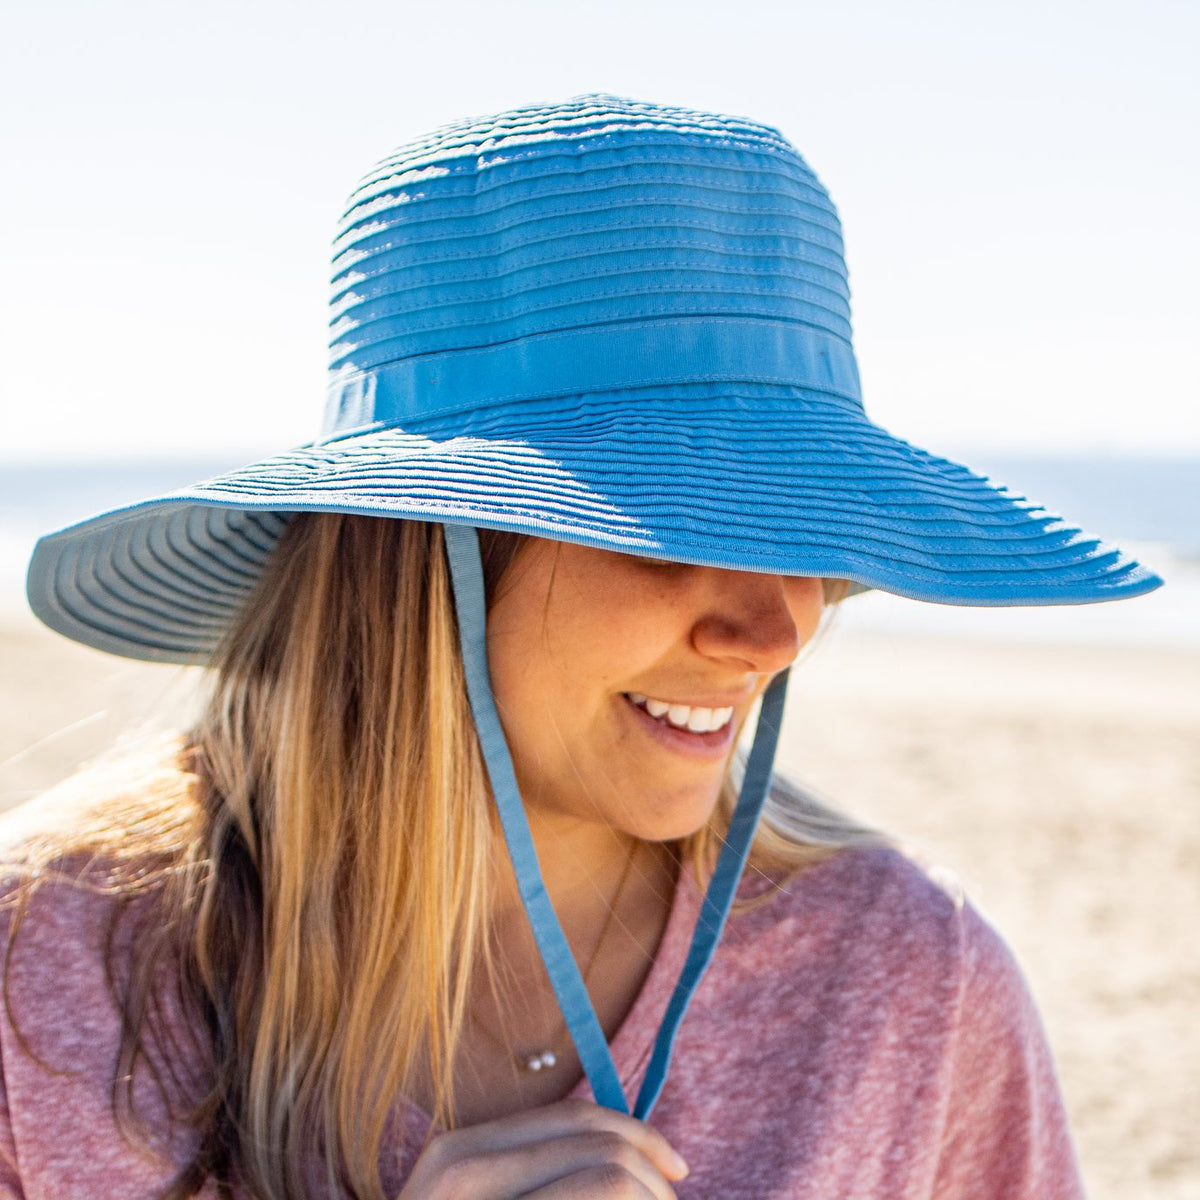  2 Packs Bucket Hat For Women Men Cotton Summer Sun Beach  Fishing Cap White